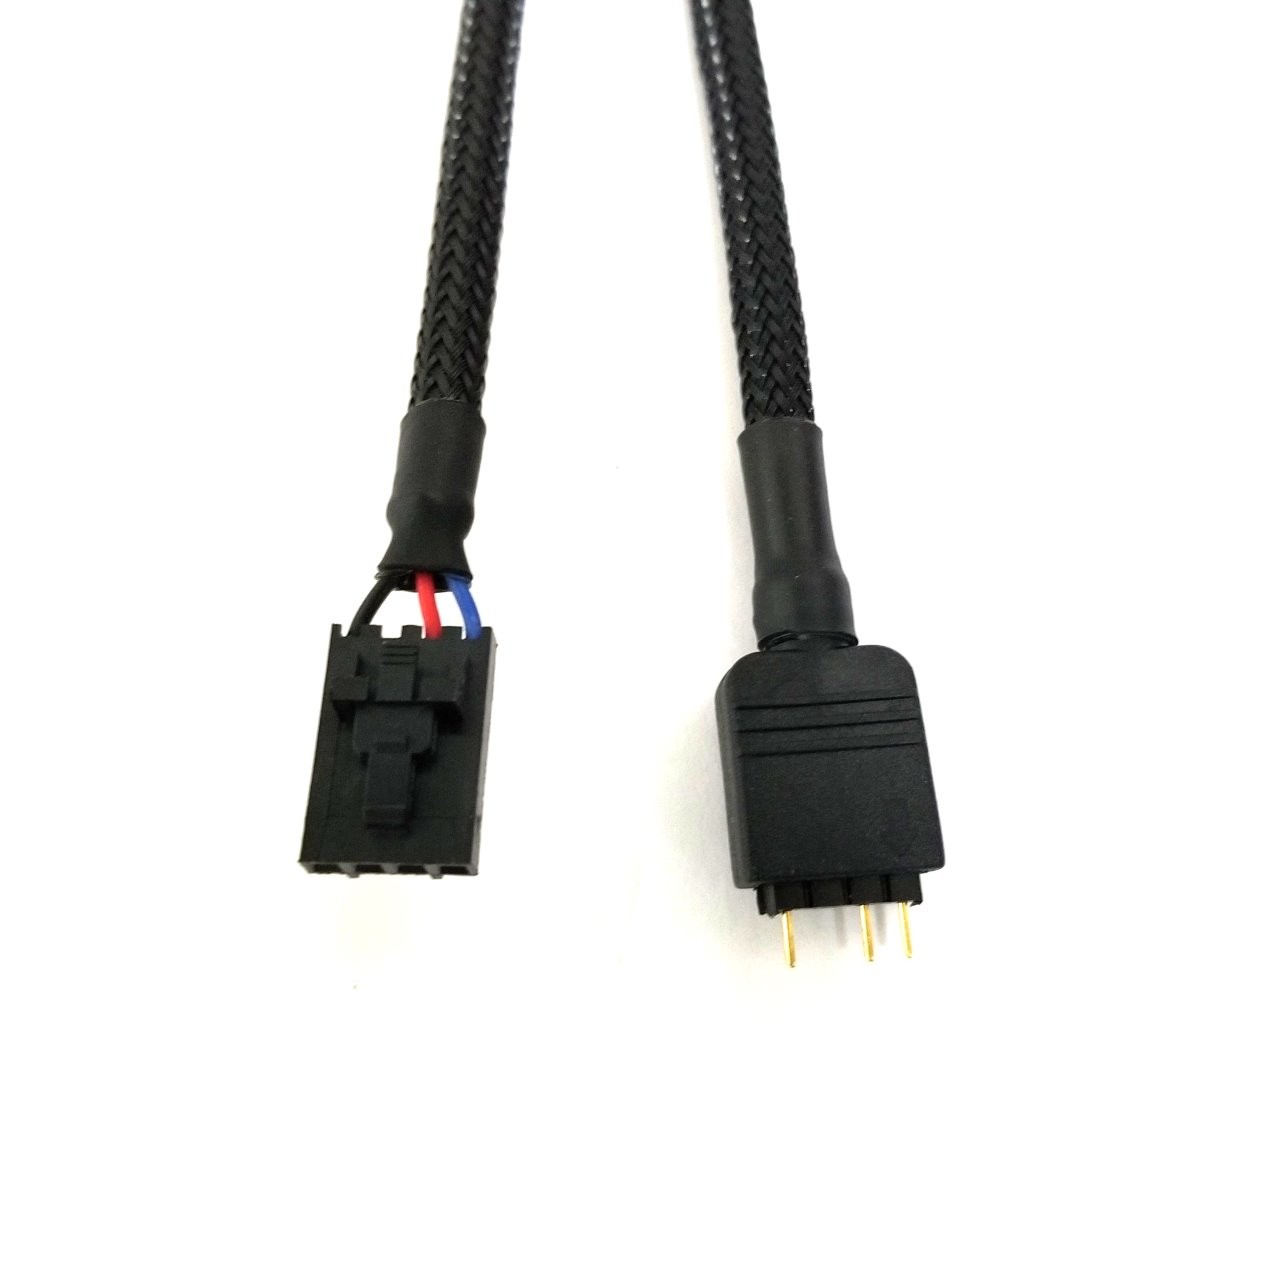 Corsair LED RGB 4 Pin to 5v RGB 3 Pin Male Connector Cable - modDIY.com